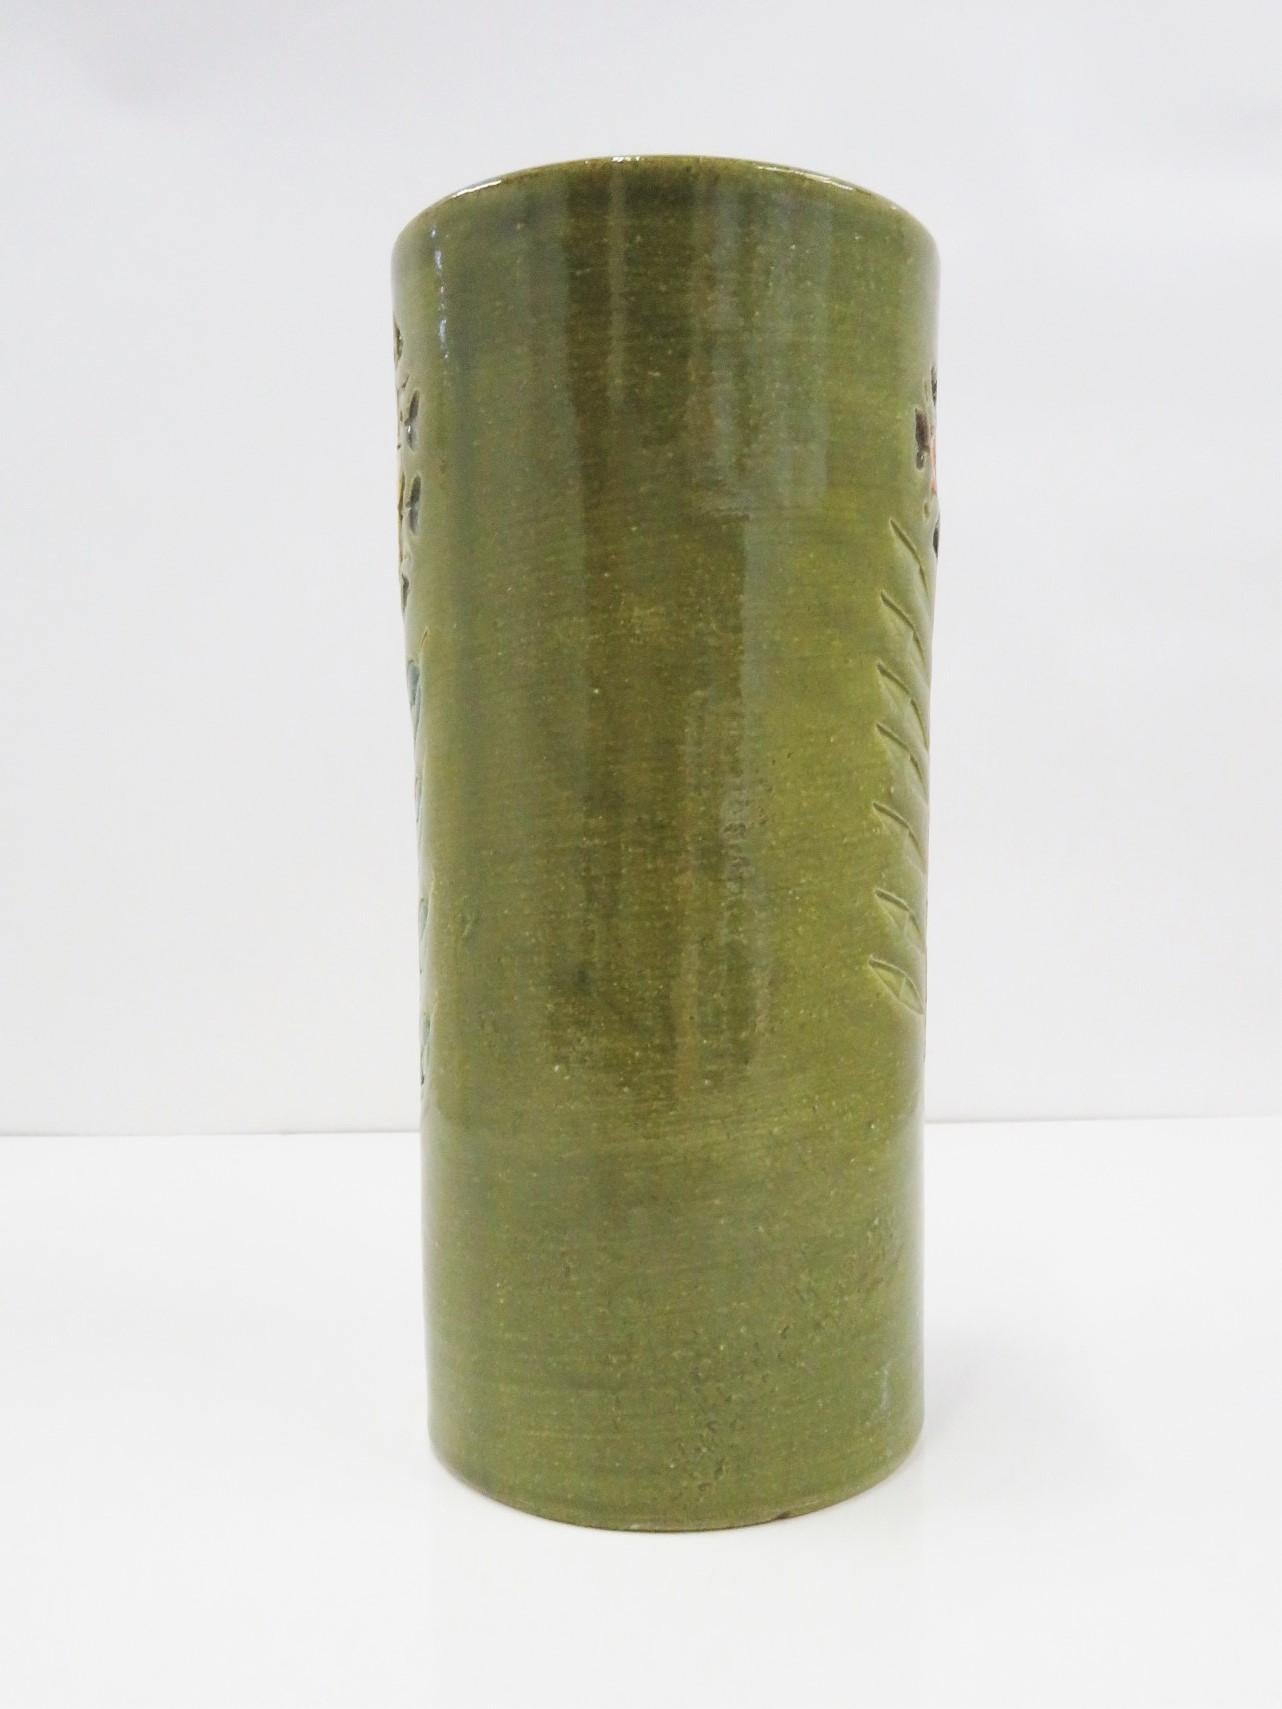 Aldo Londi for Bitossi Italian Mid-Century Modern Cylindrical Pottery Vase 1960s For Sale 1